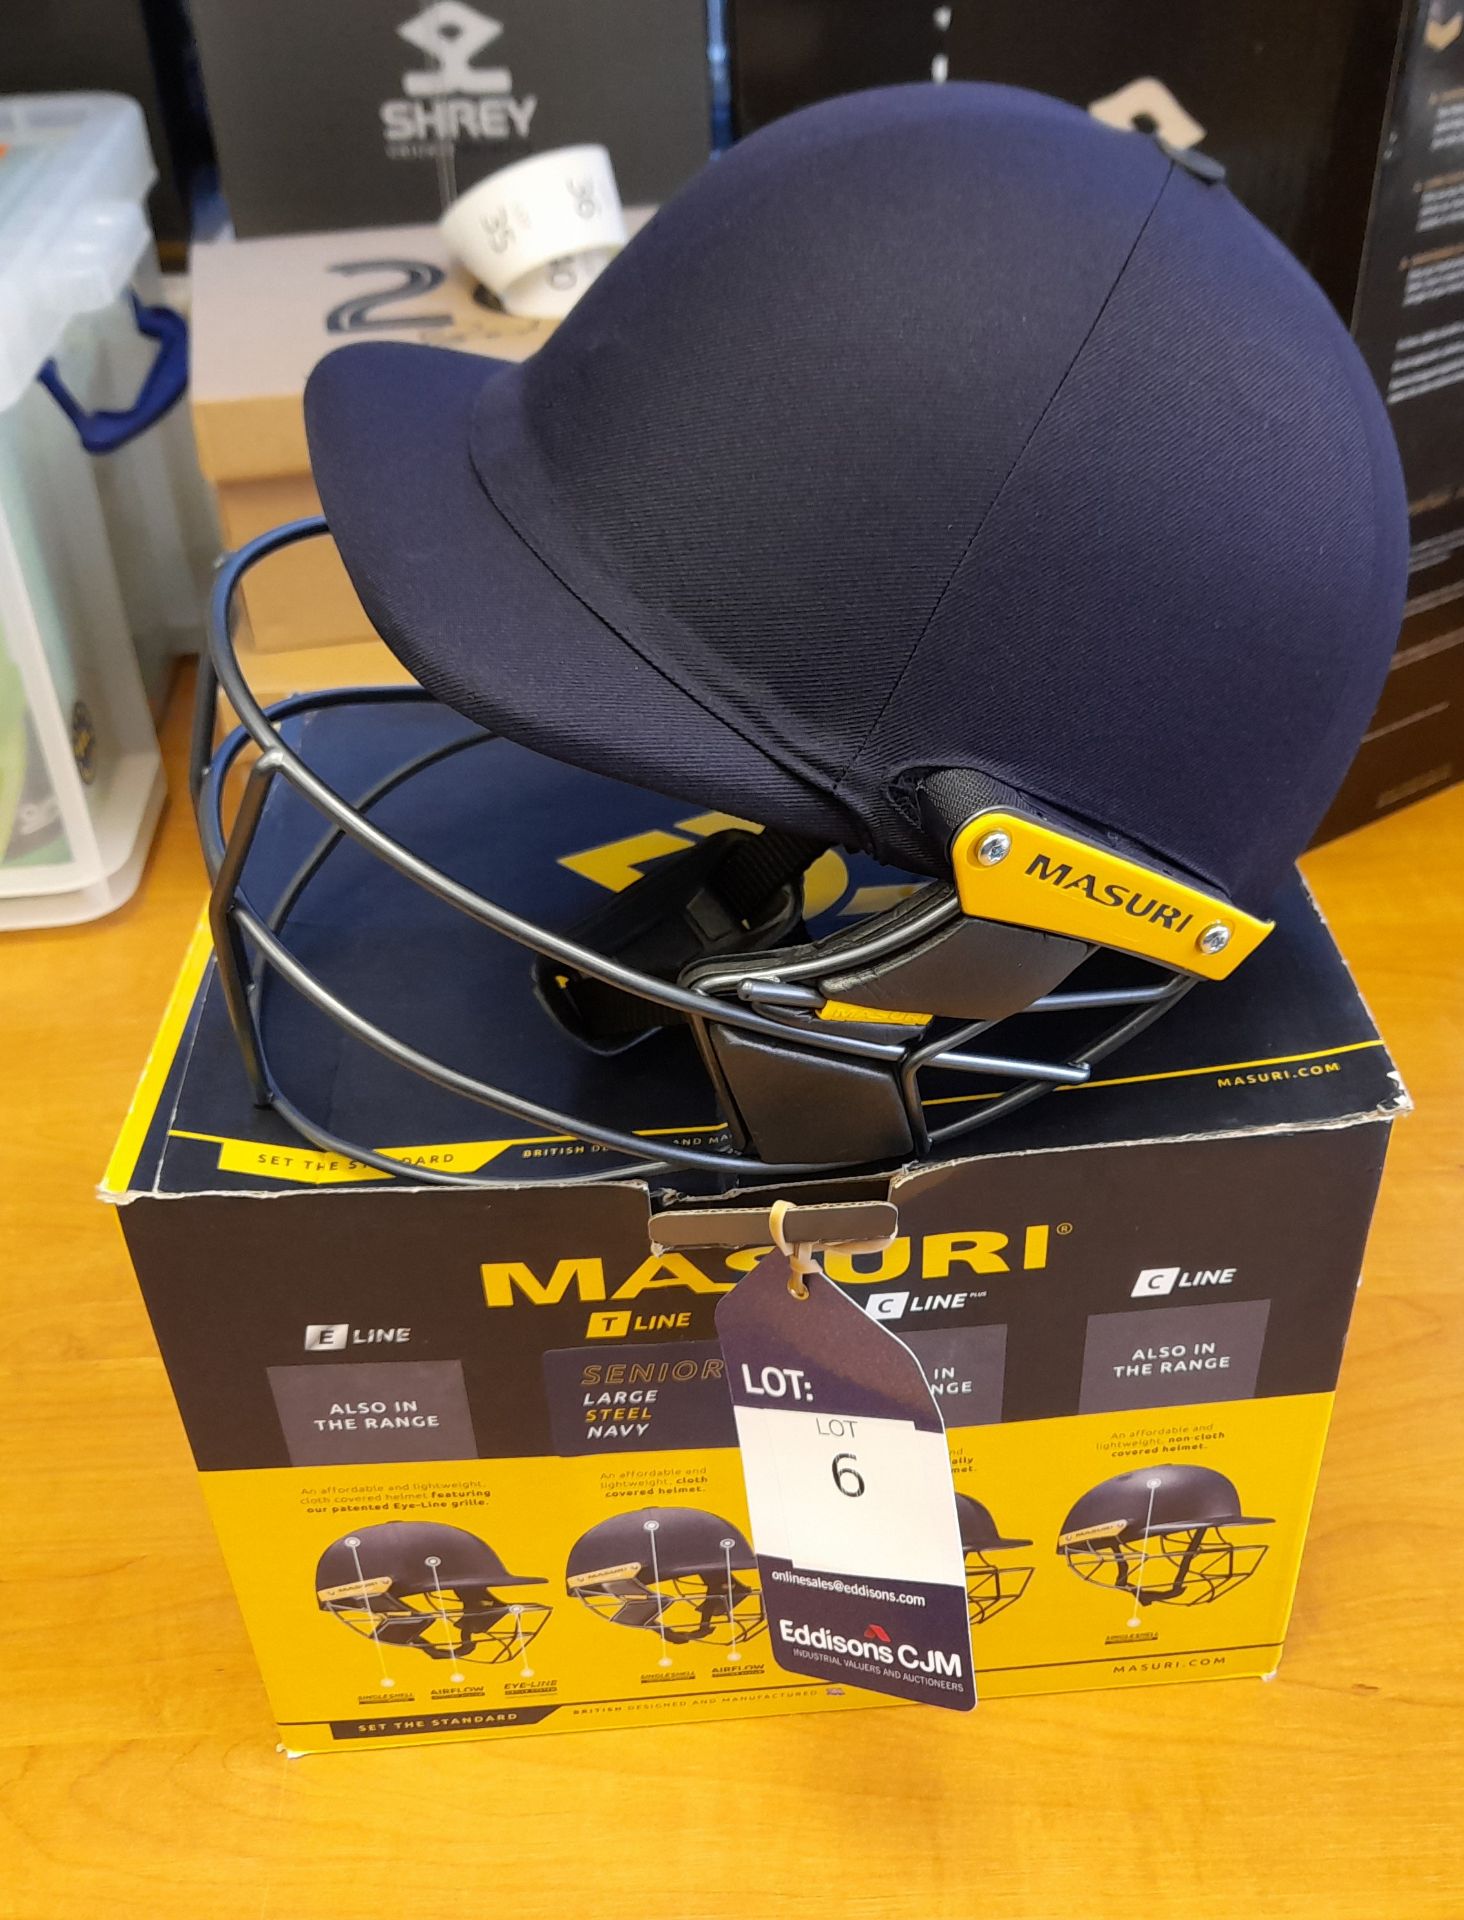 Masuri T Line Original Series MKII Test Helmet with Steel Grill, Size Senior Large, Box, Rrp. £89.